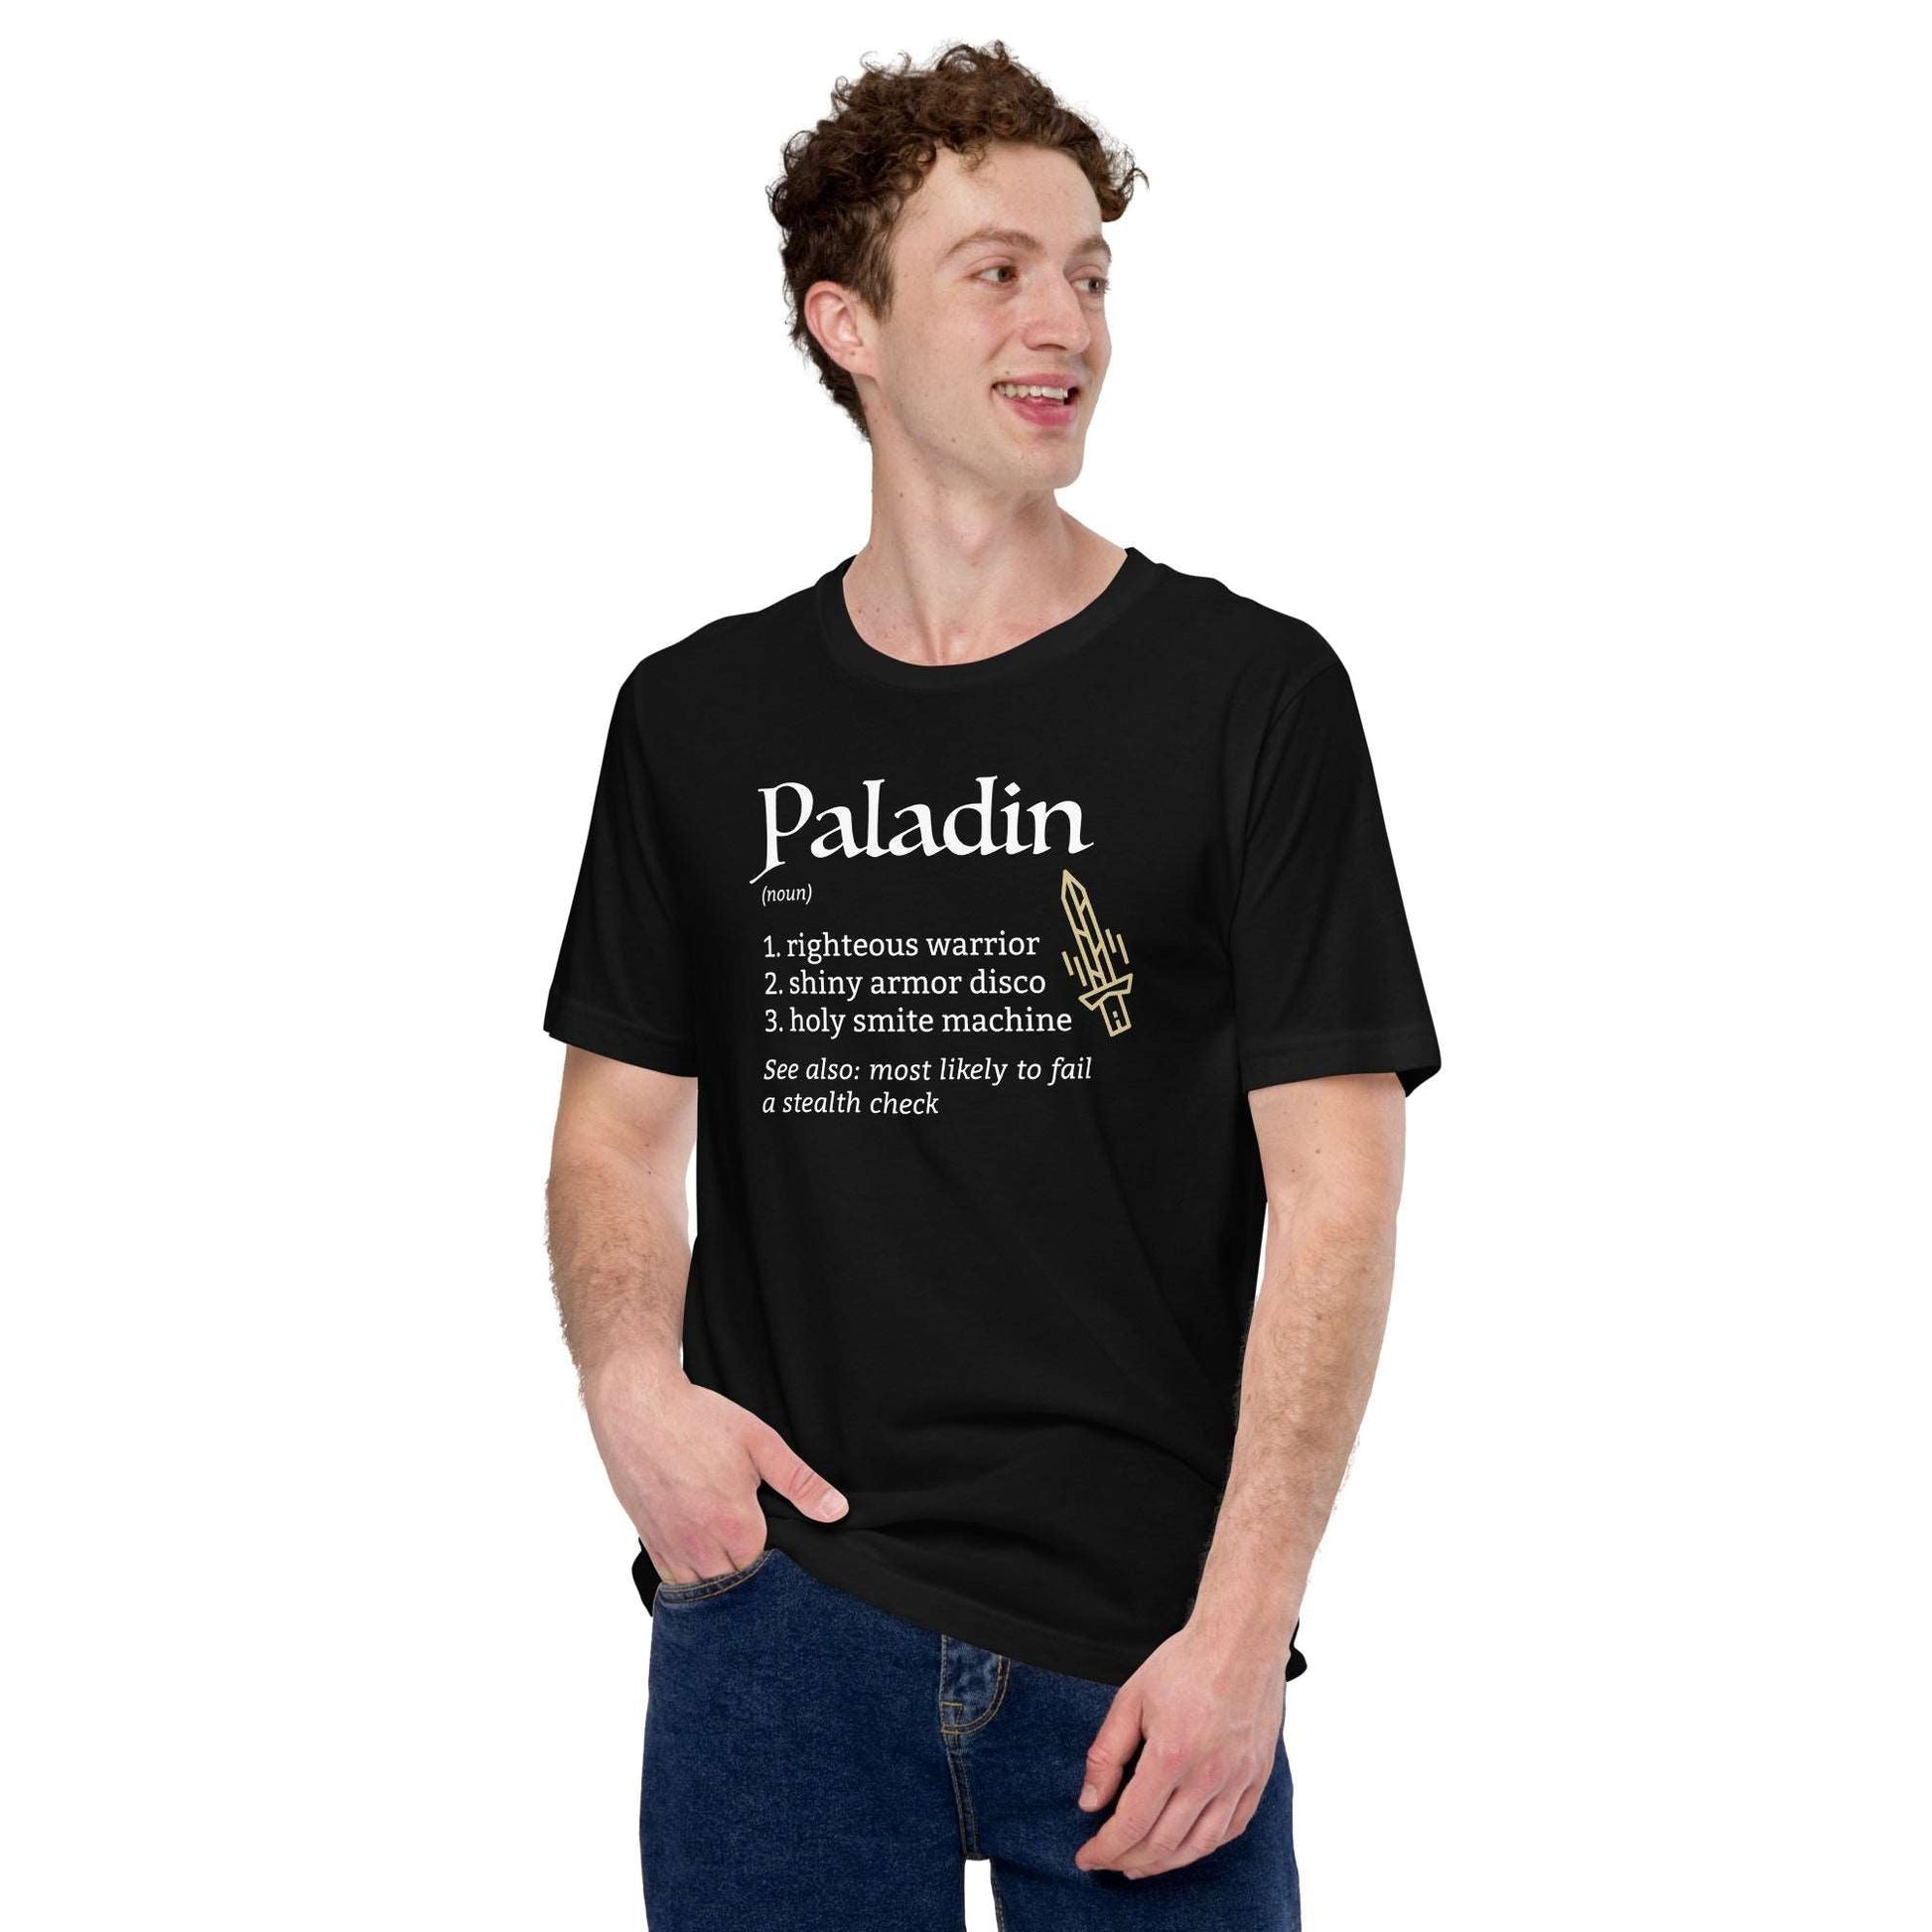 Paladin Class Definition T-Shirt – Funny DnD Definition Tee T-Shirt